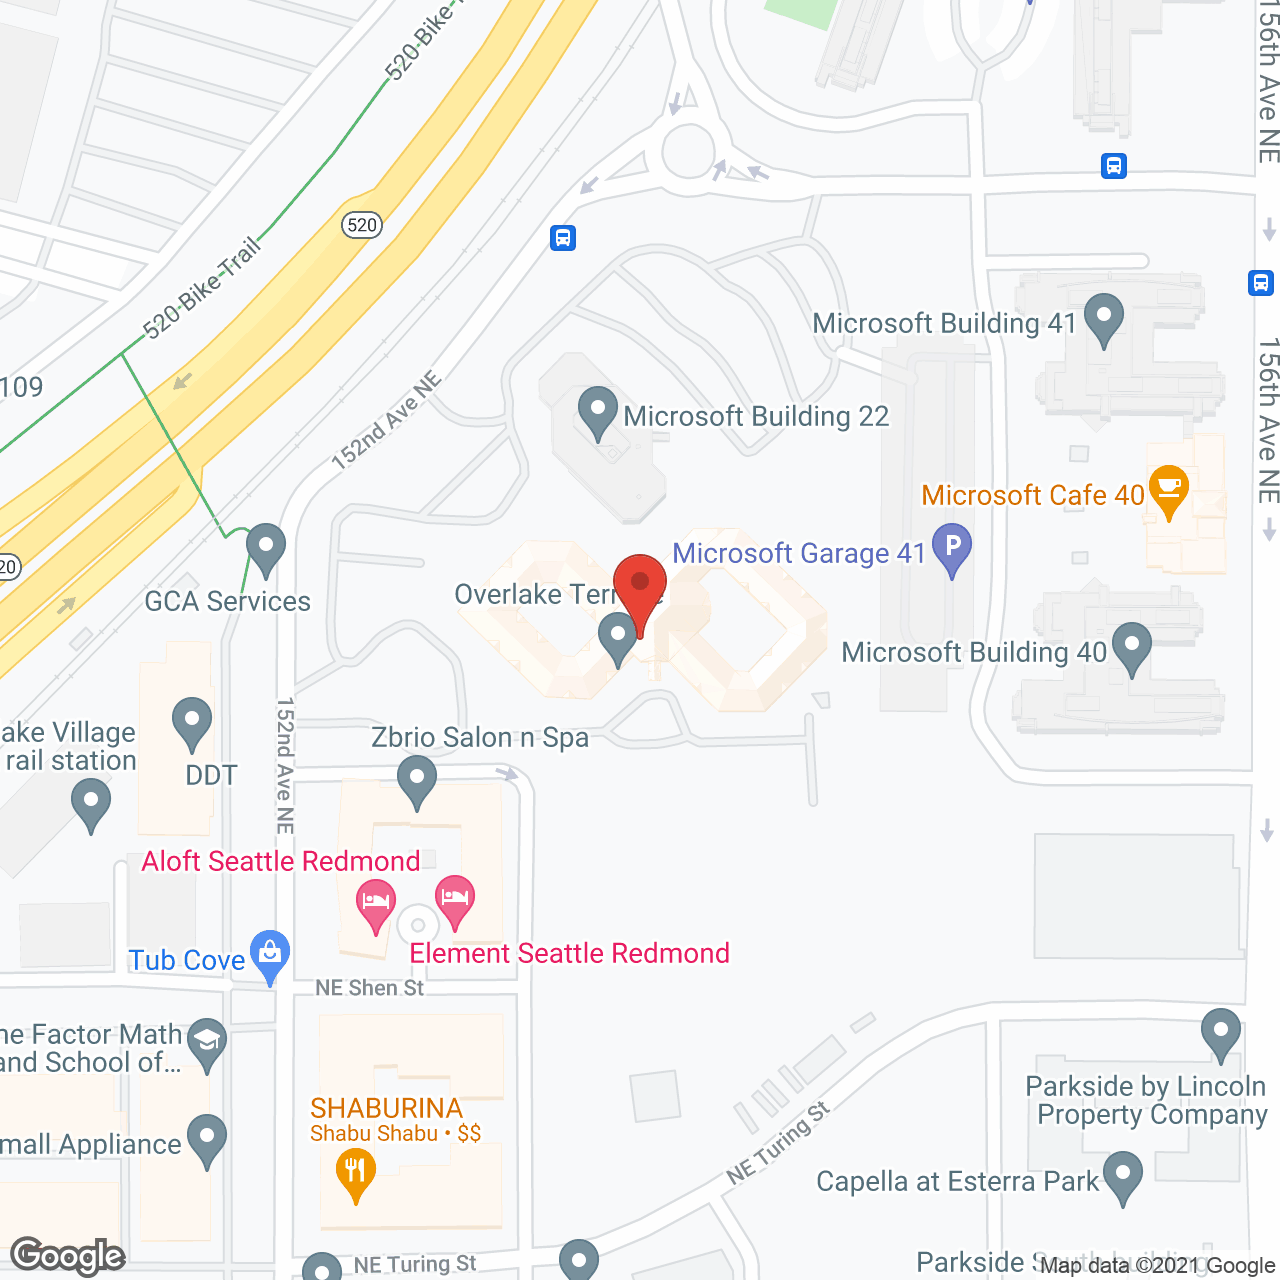 Overlake Terrace in google map